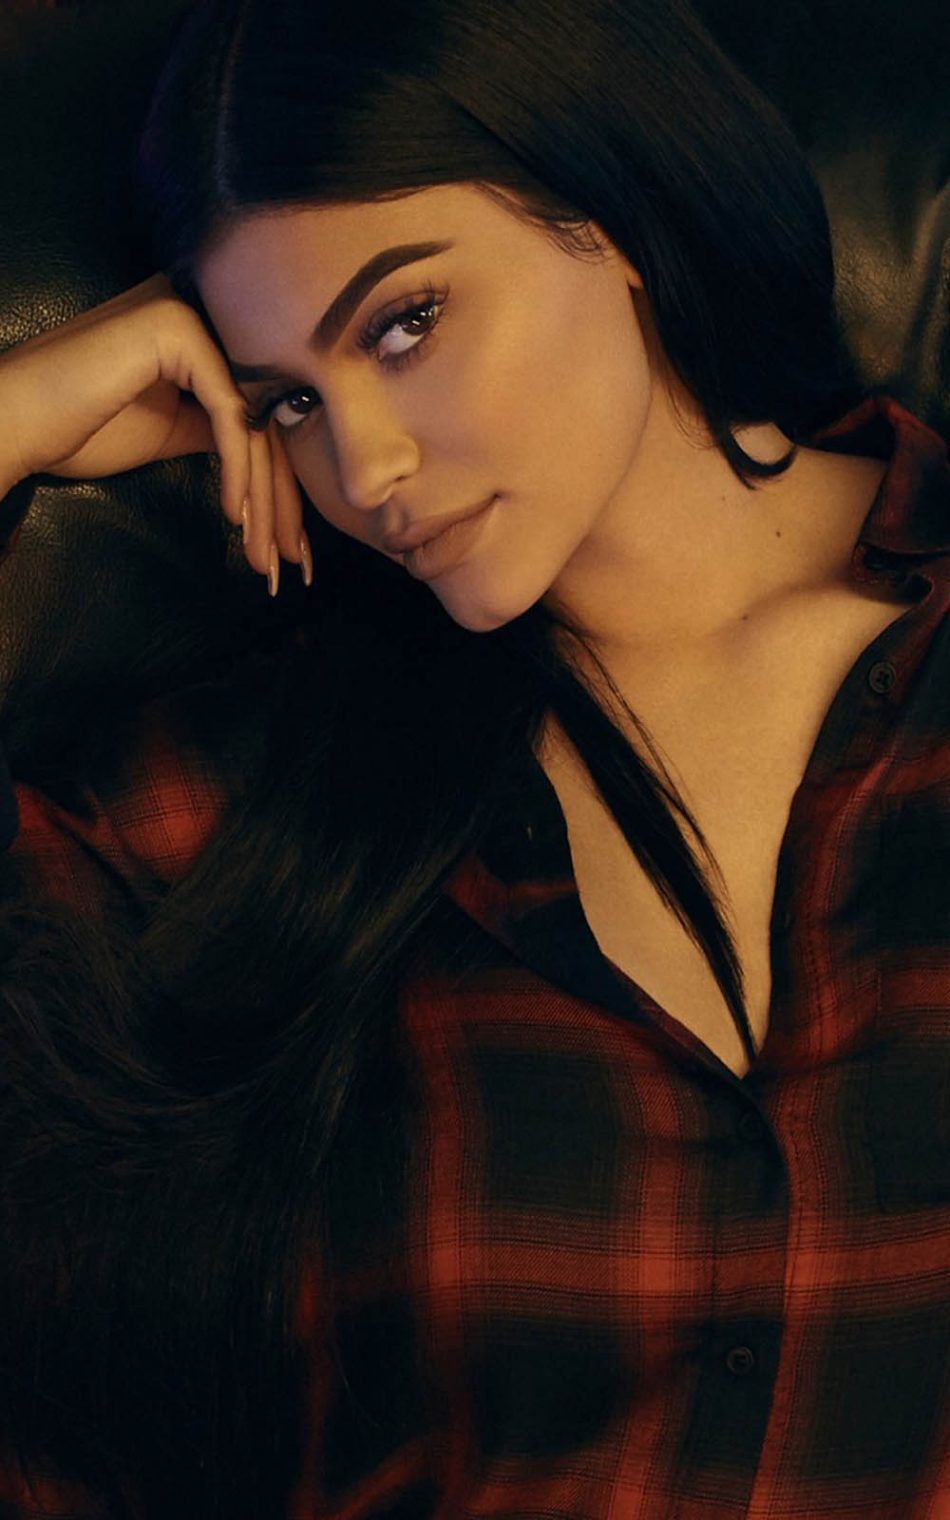 Kylie Jenner Wallpaper HD Image